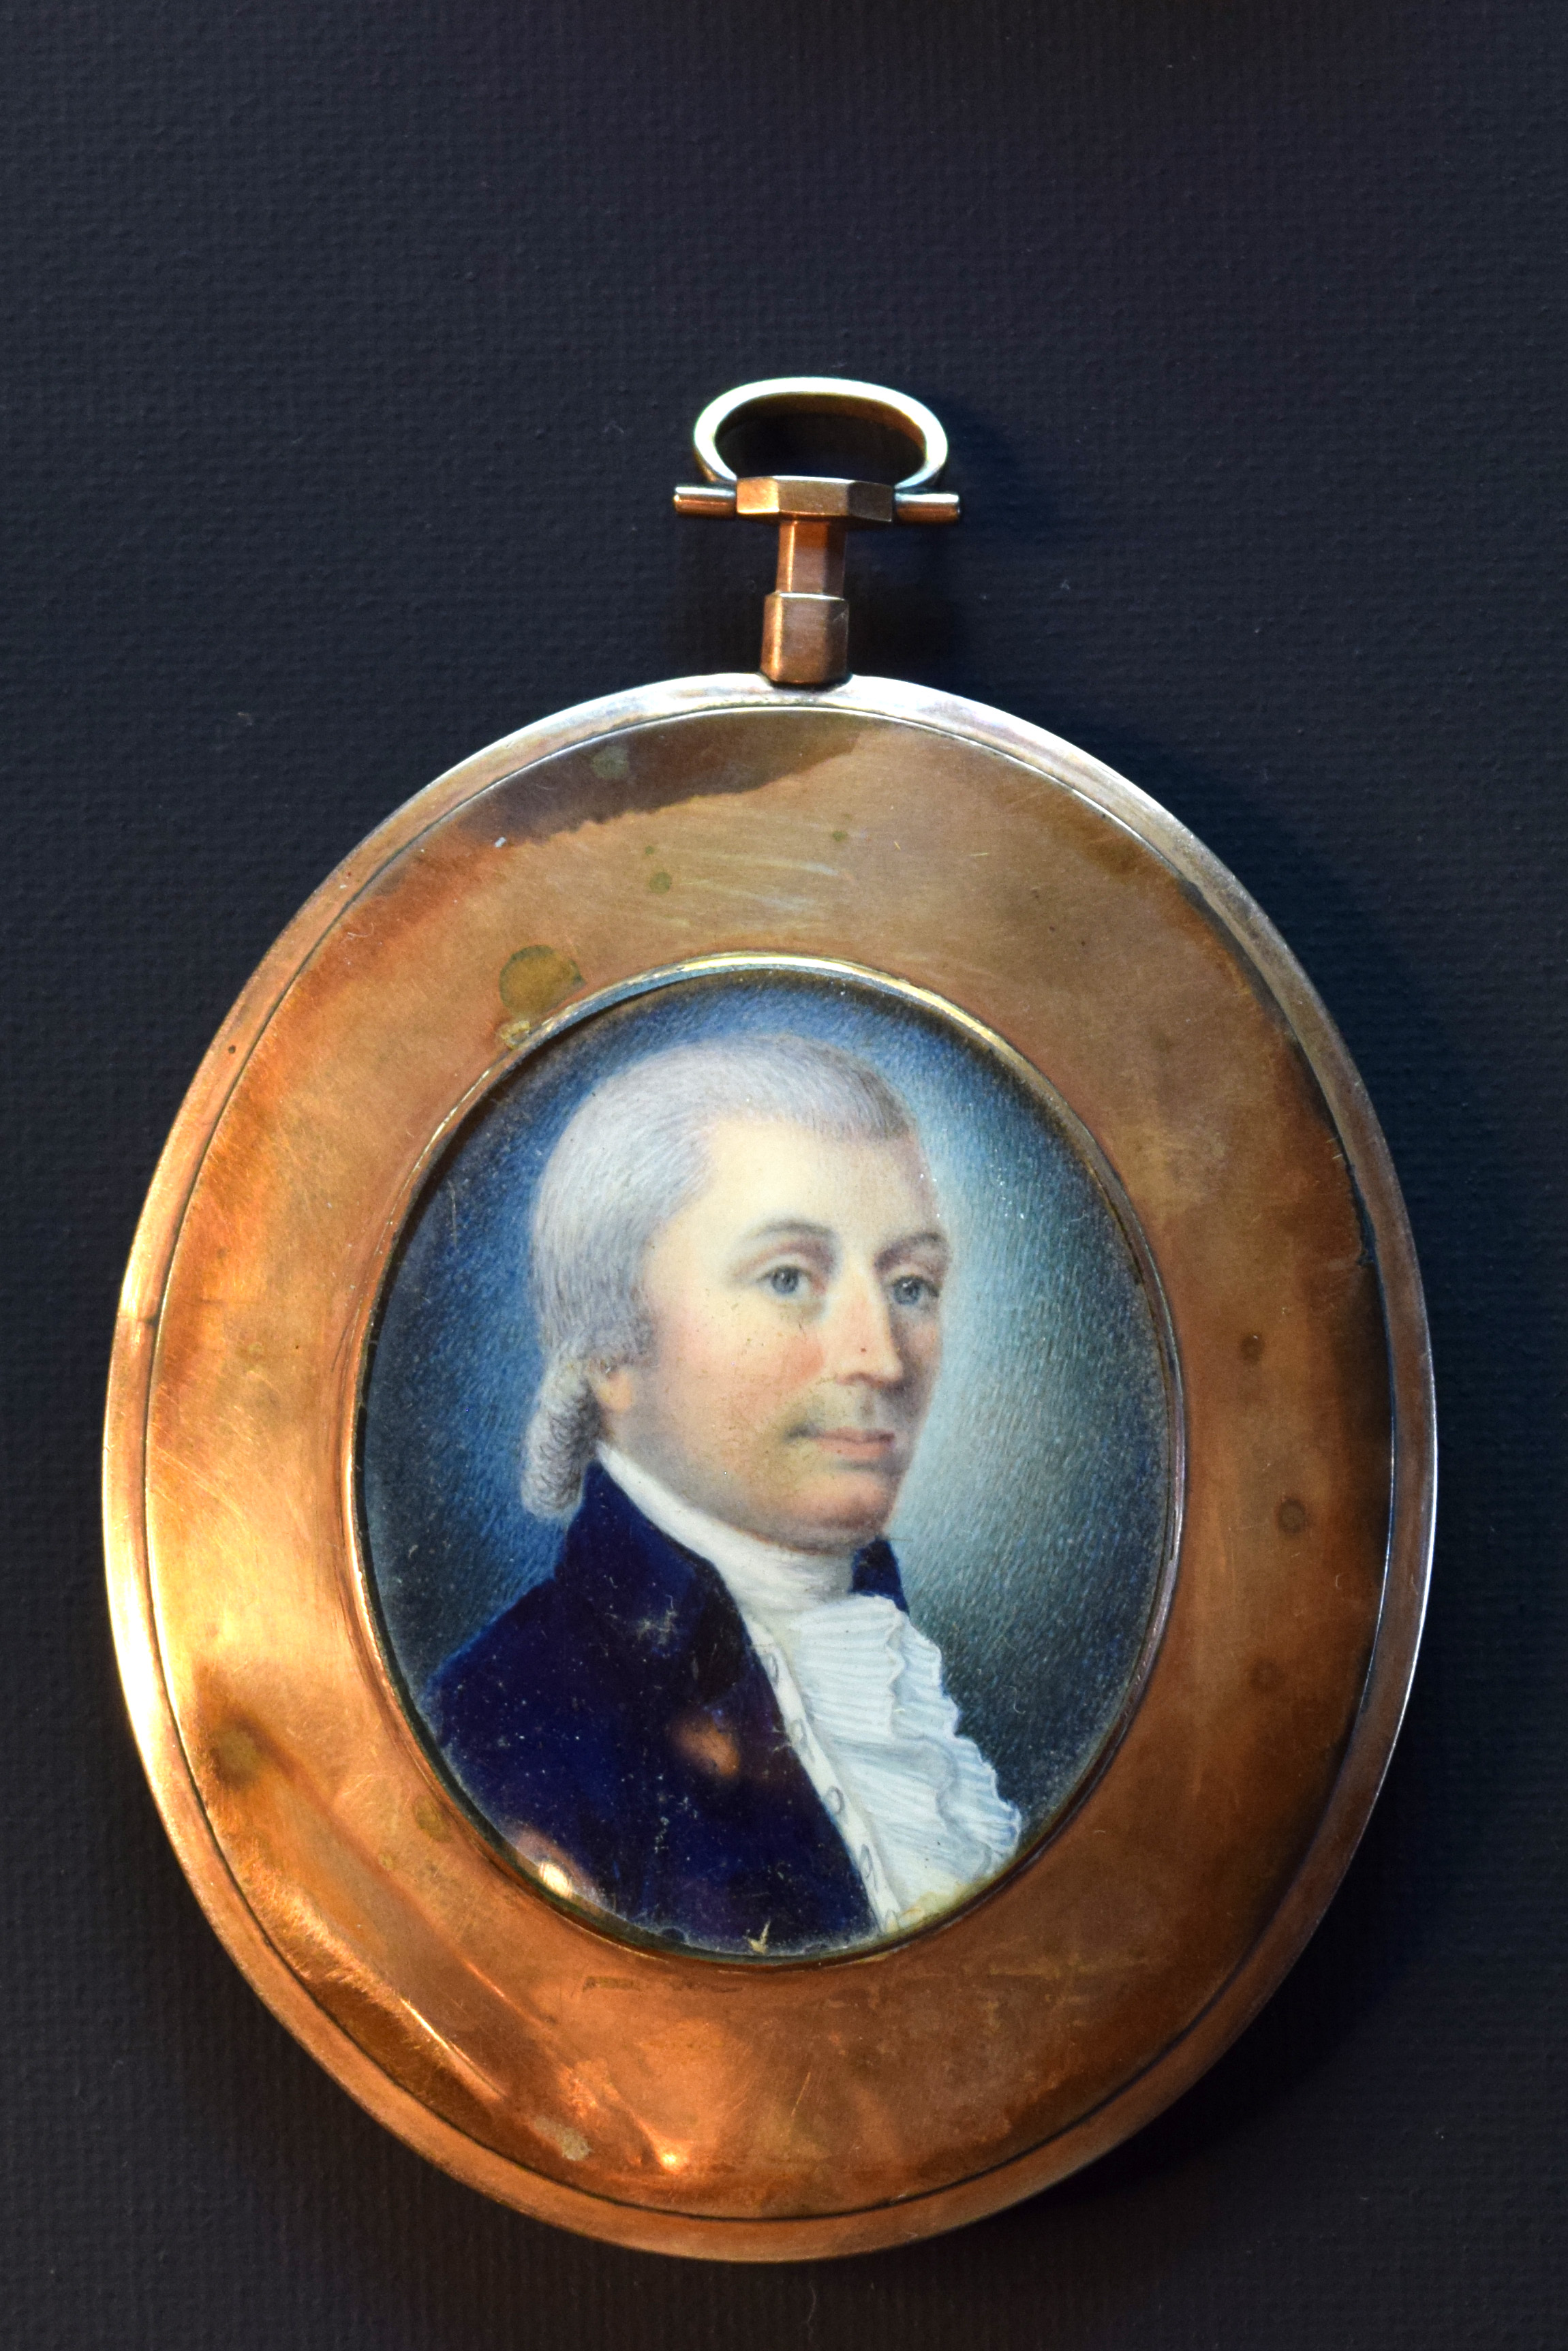 A close-up of the Richard Lushington miniature portrait